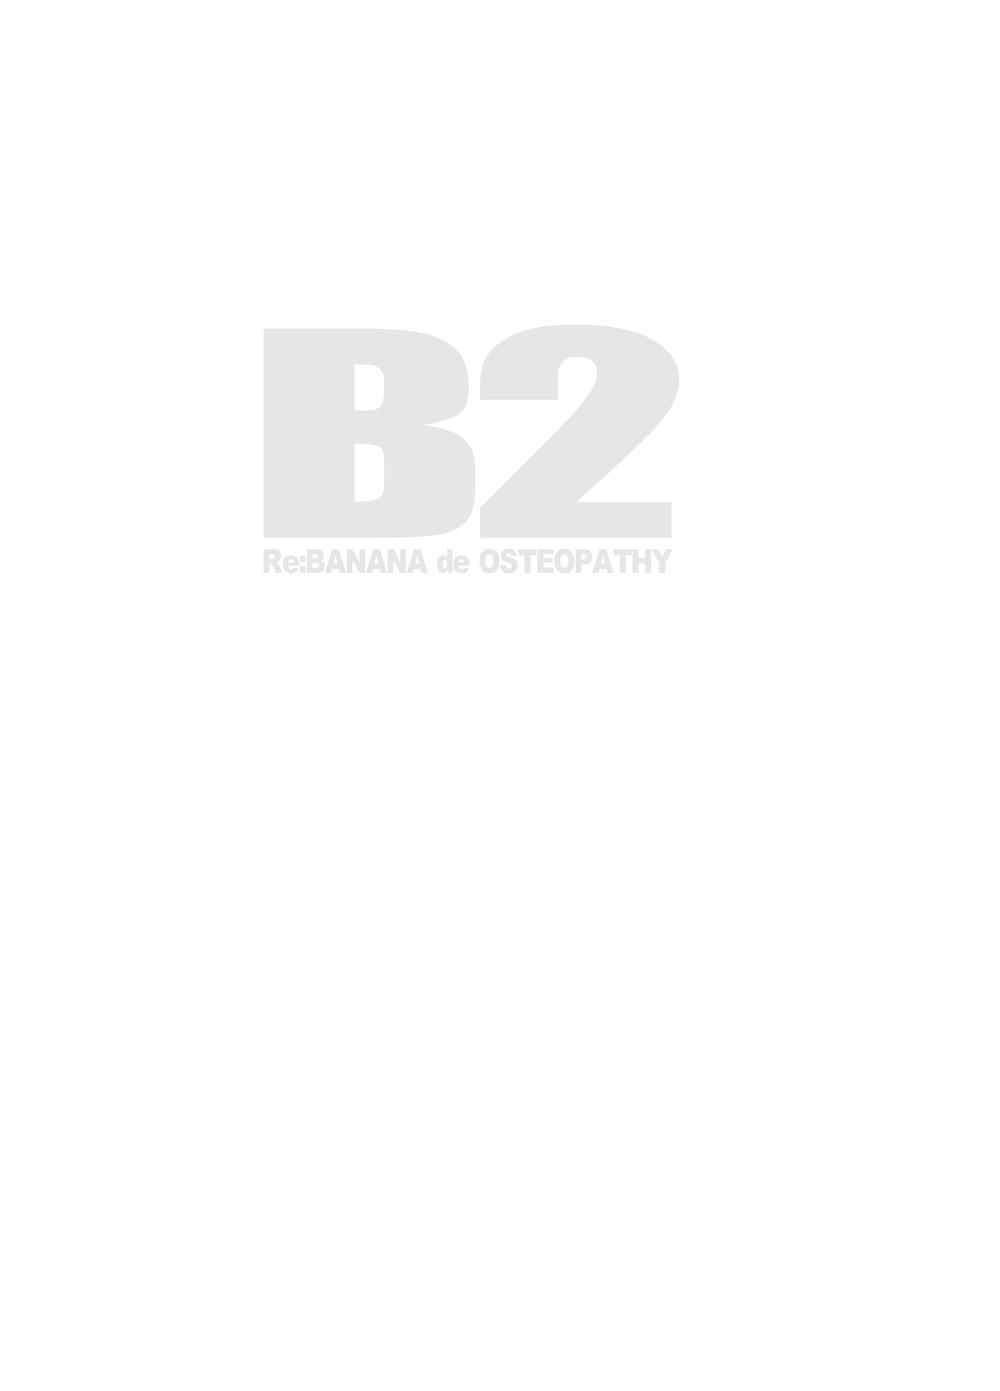 Large B2:Re BANANA de OSTEOPATHY Web Cam - Page 2